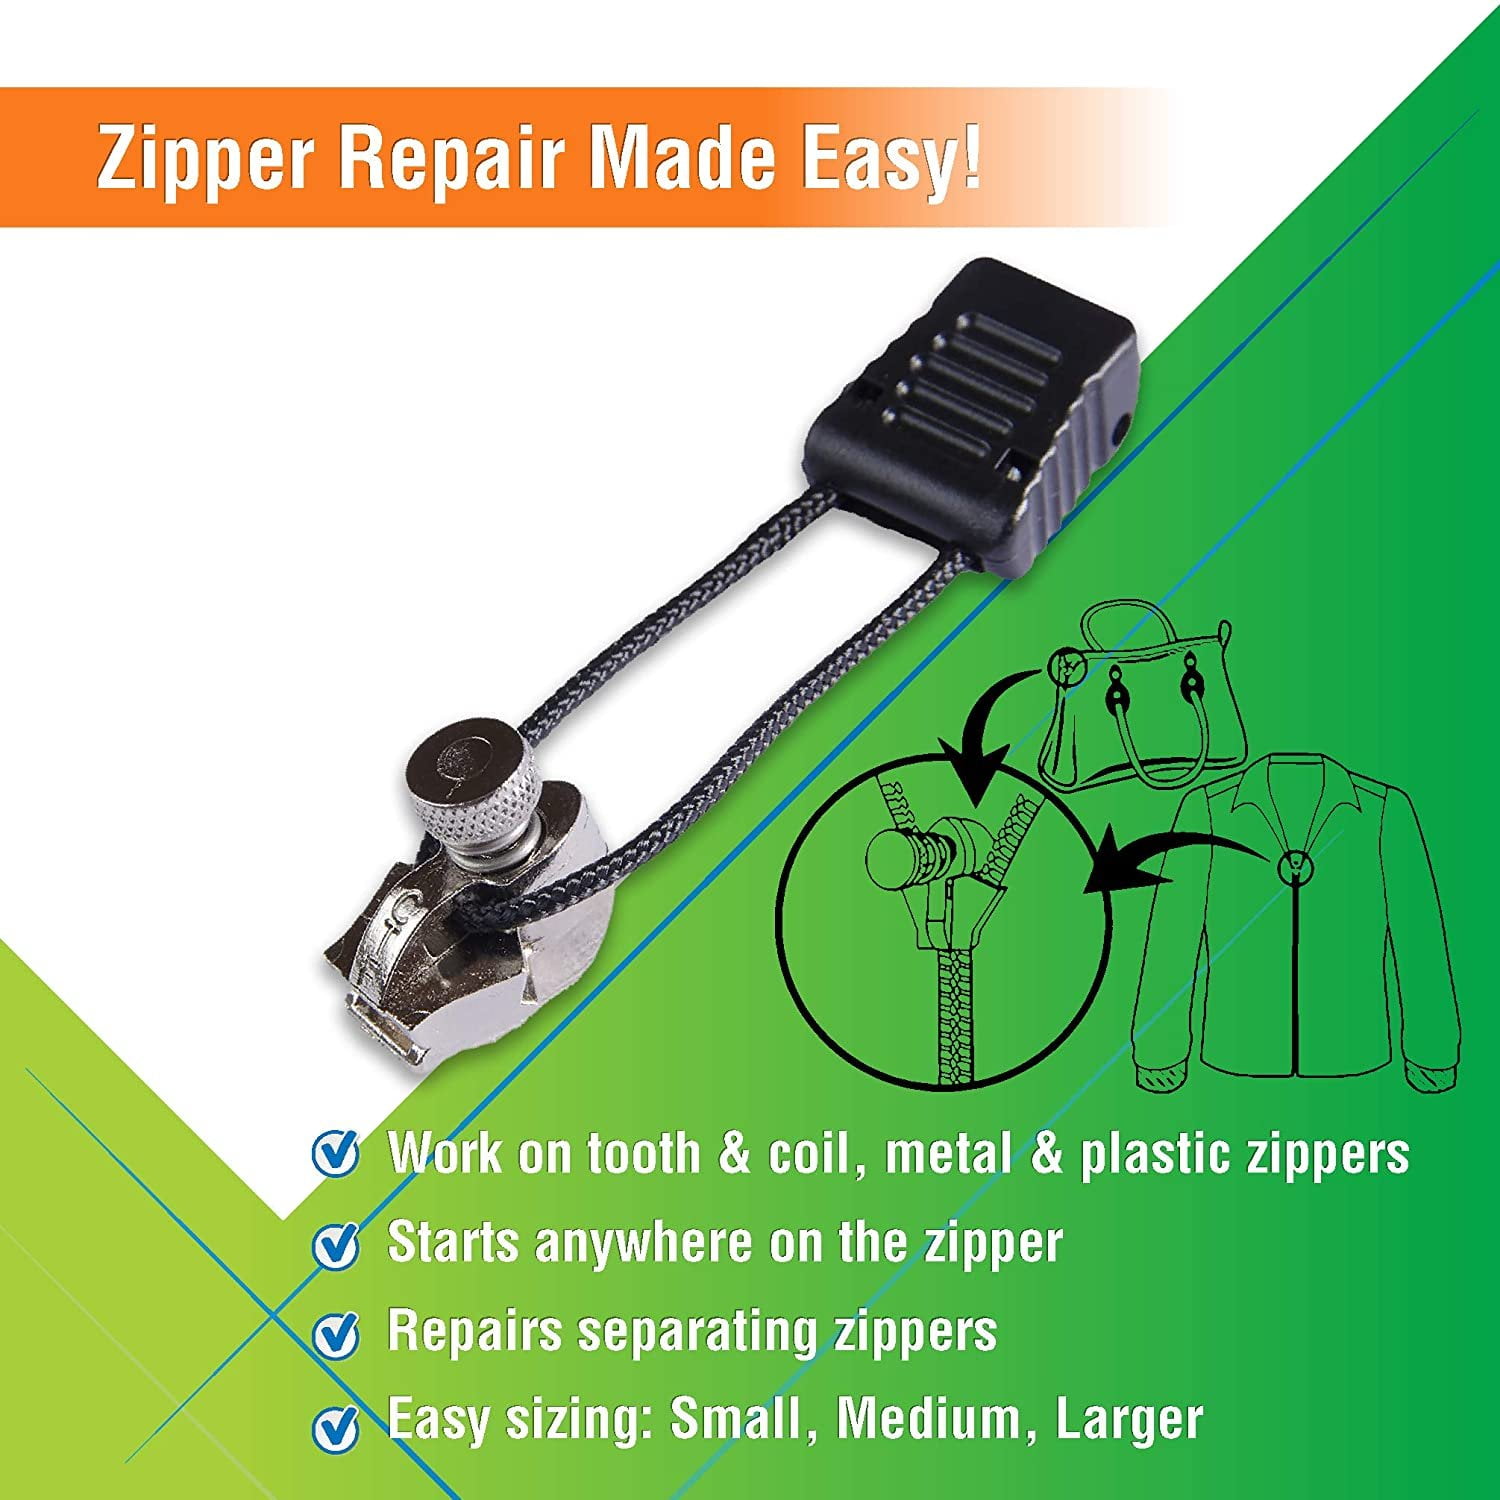 Zipper 101: Locking vs. Non-Locking Zippers - FixnZip